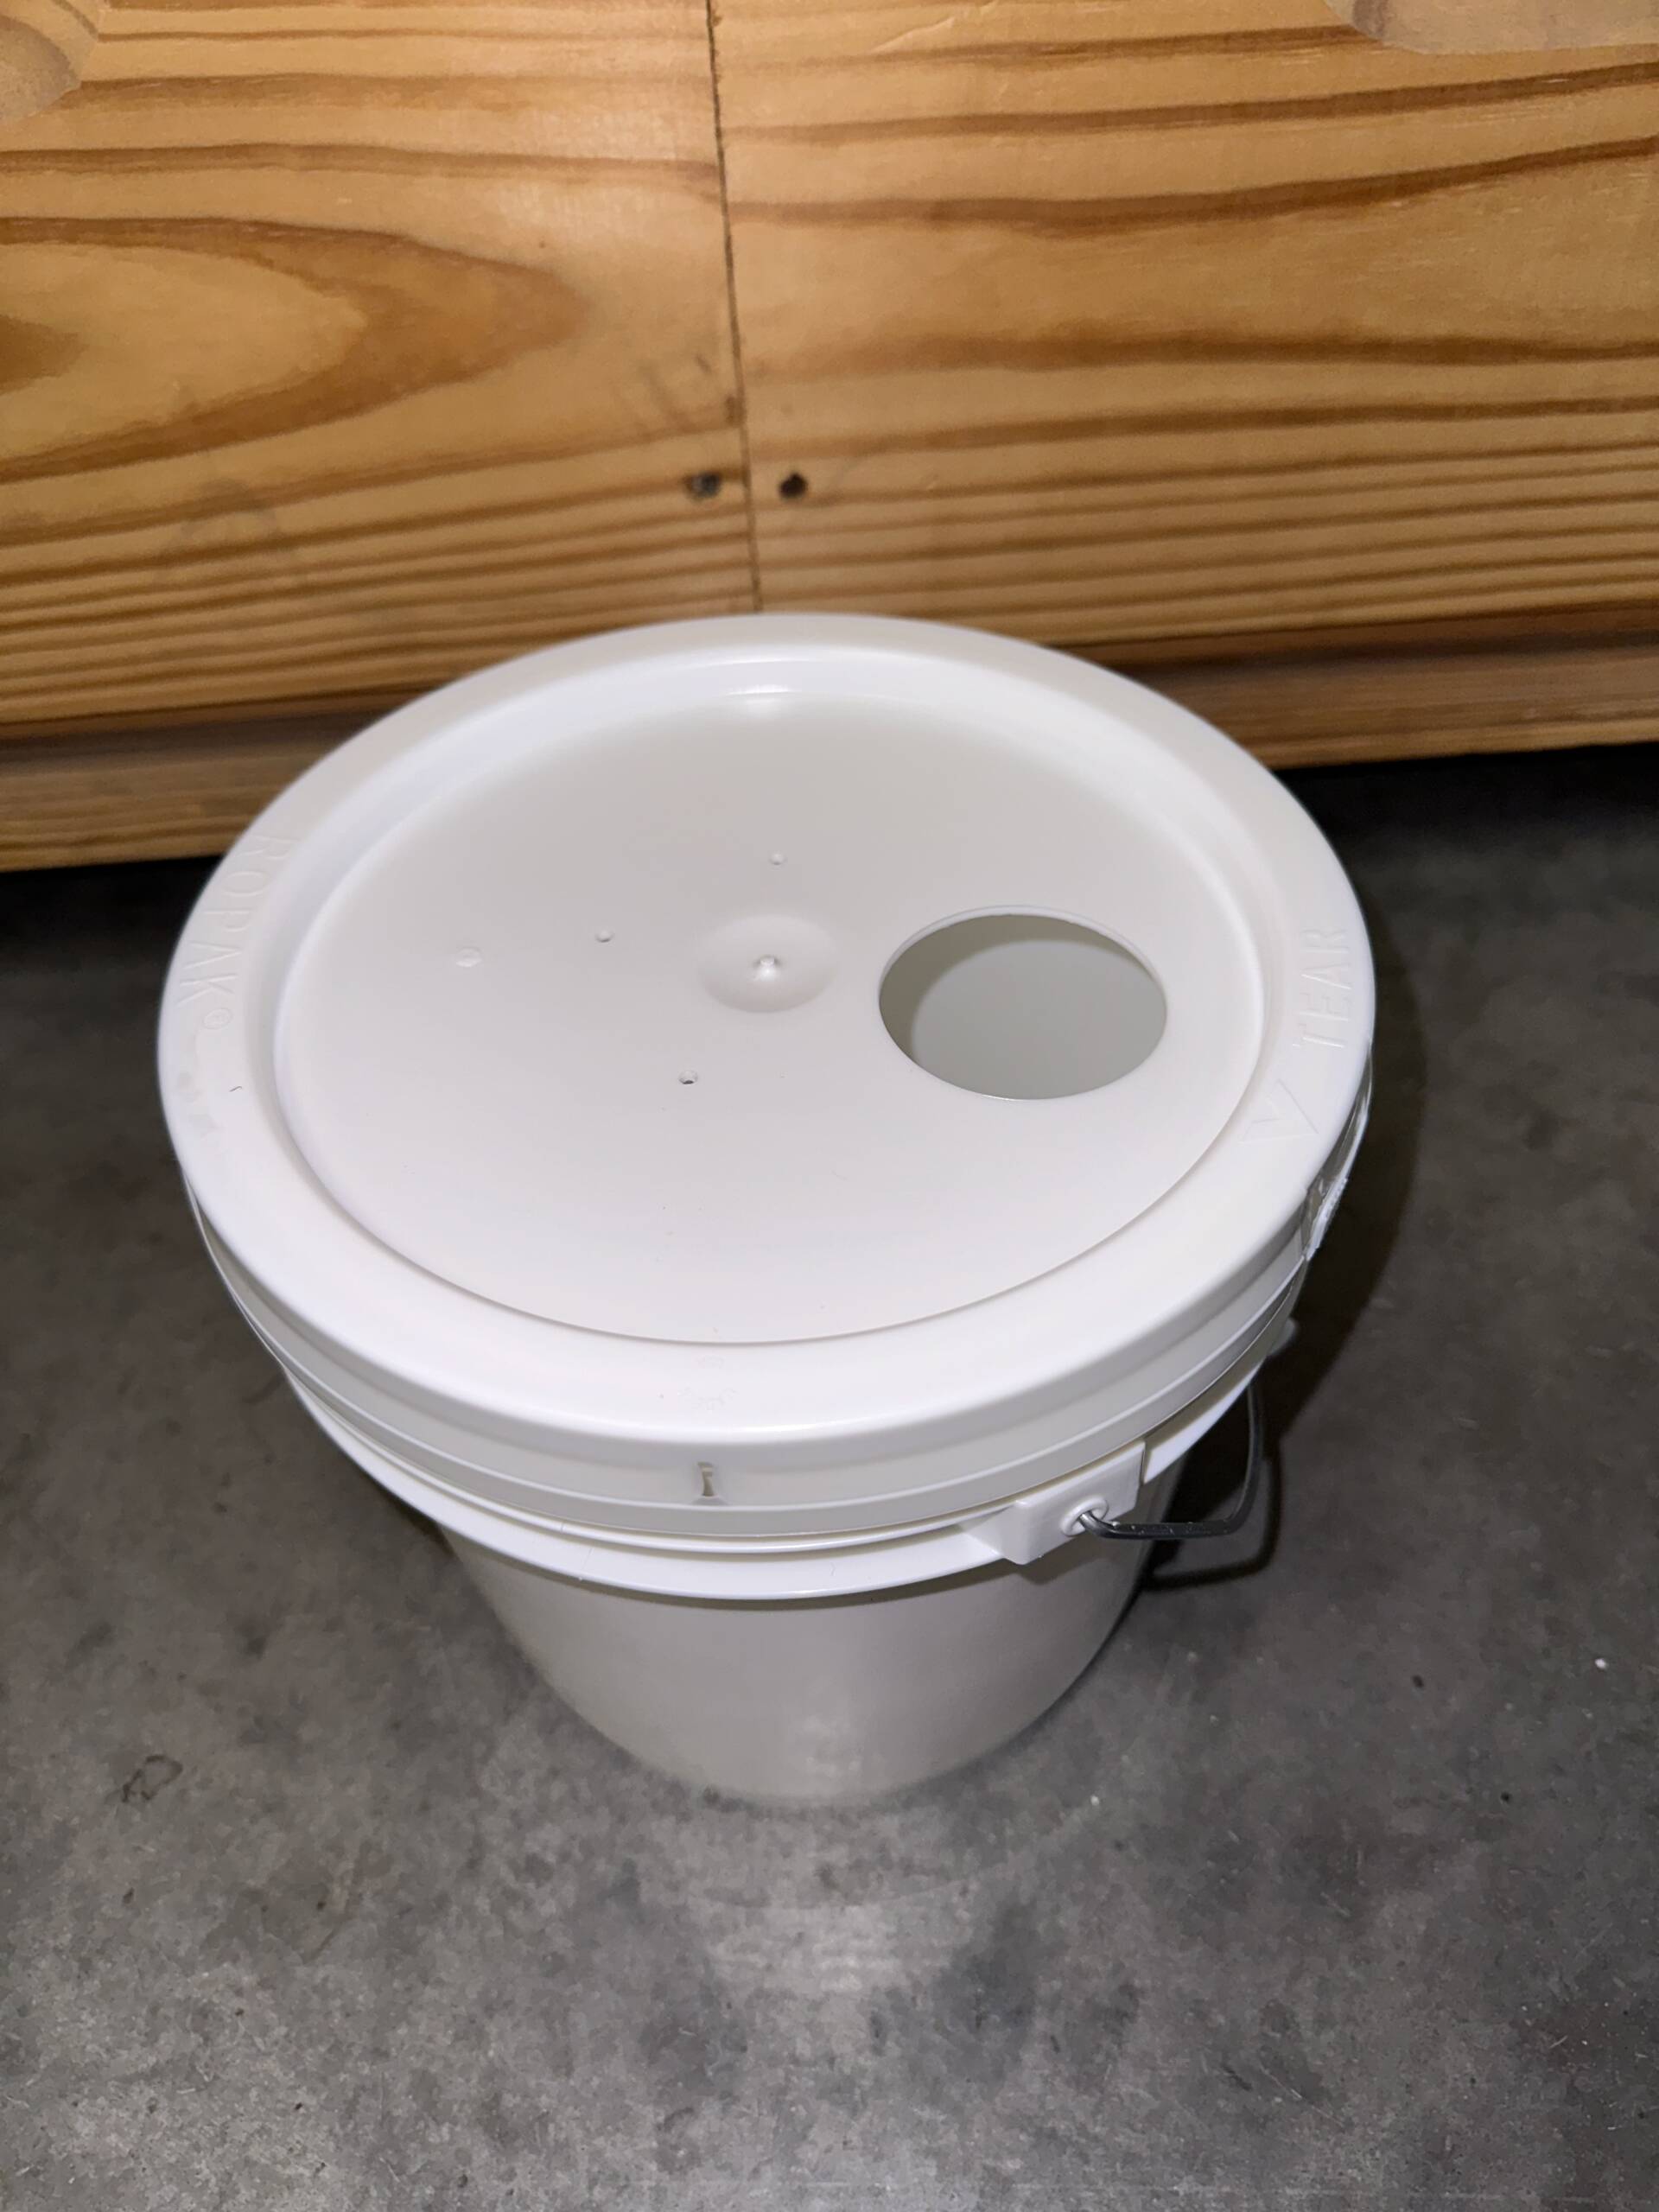 6 Gallon Bucket - No Hole